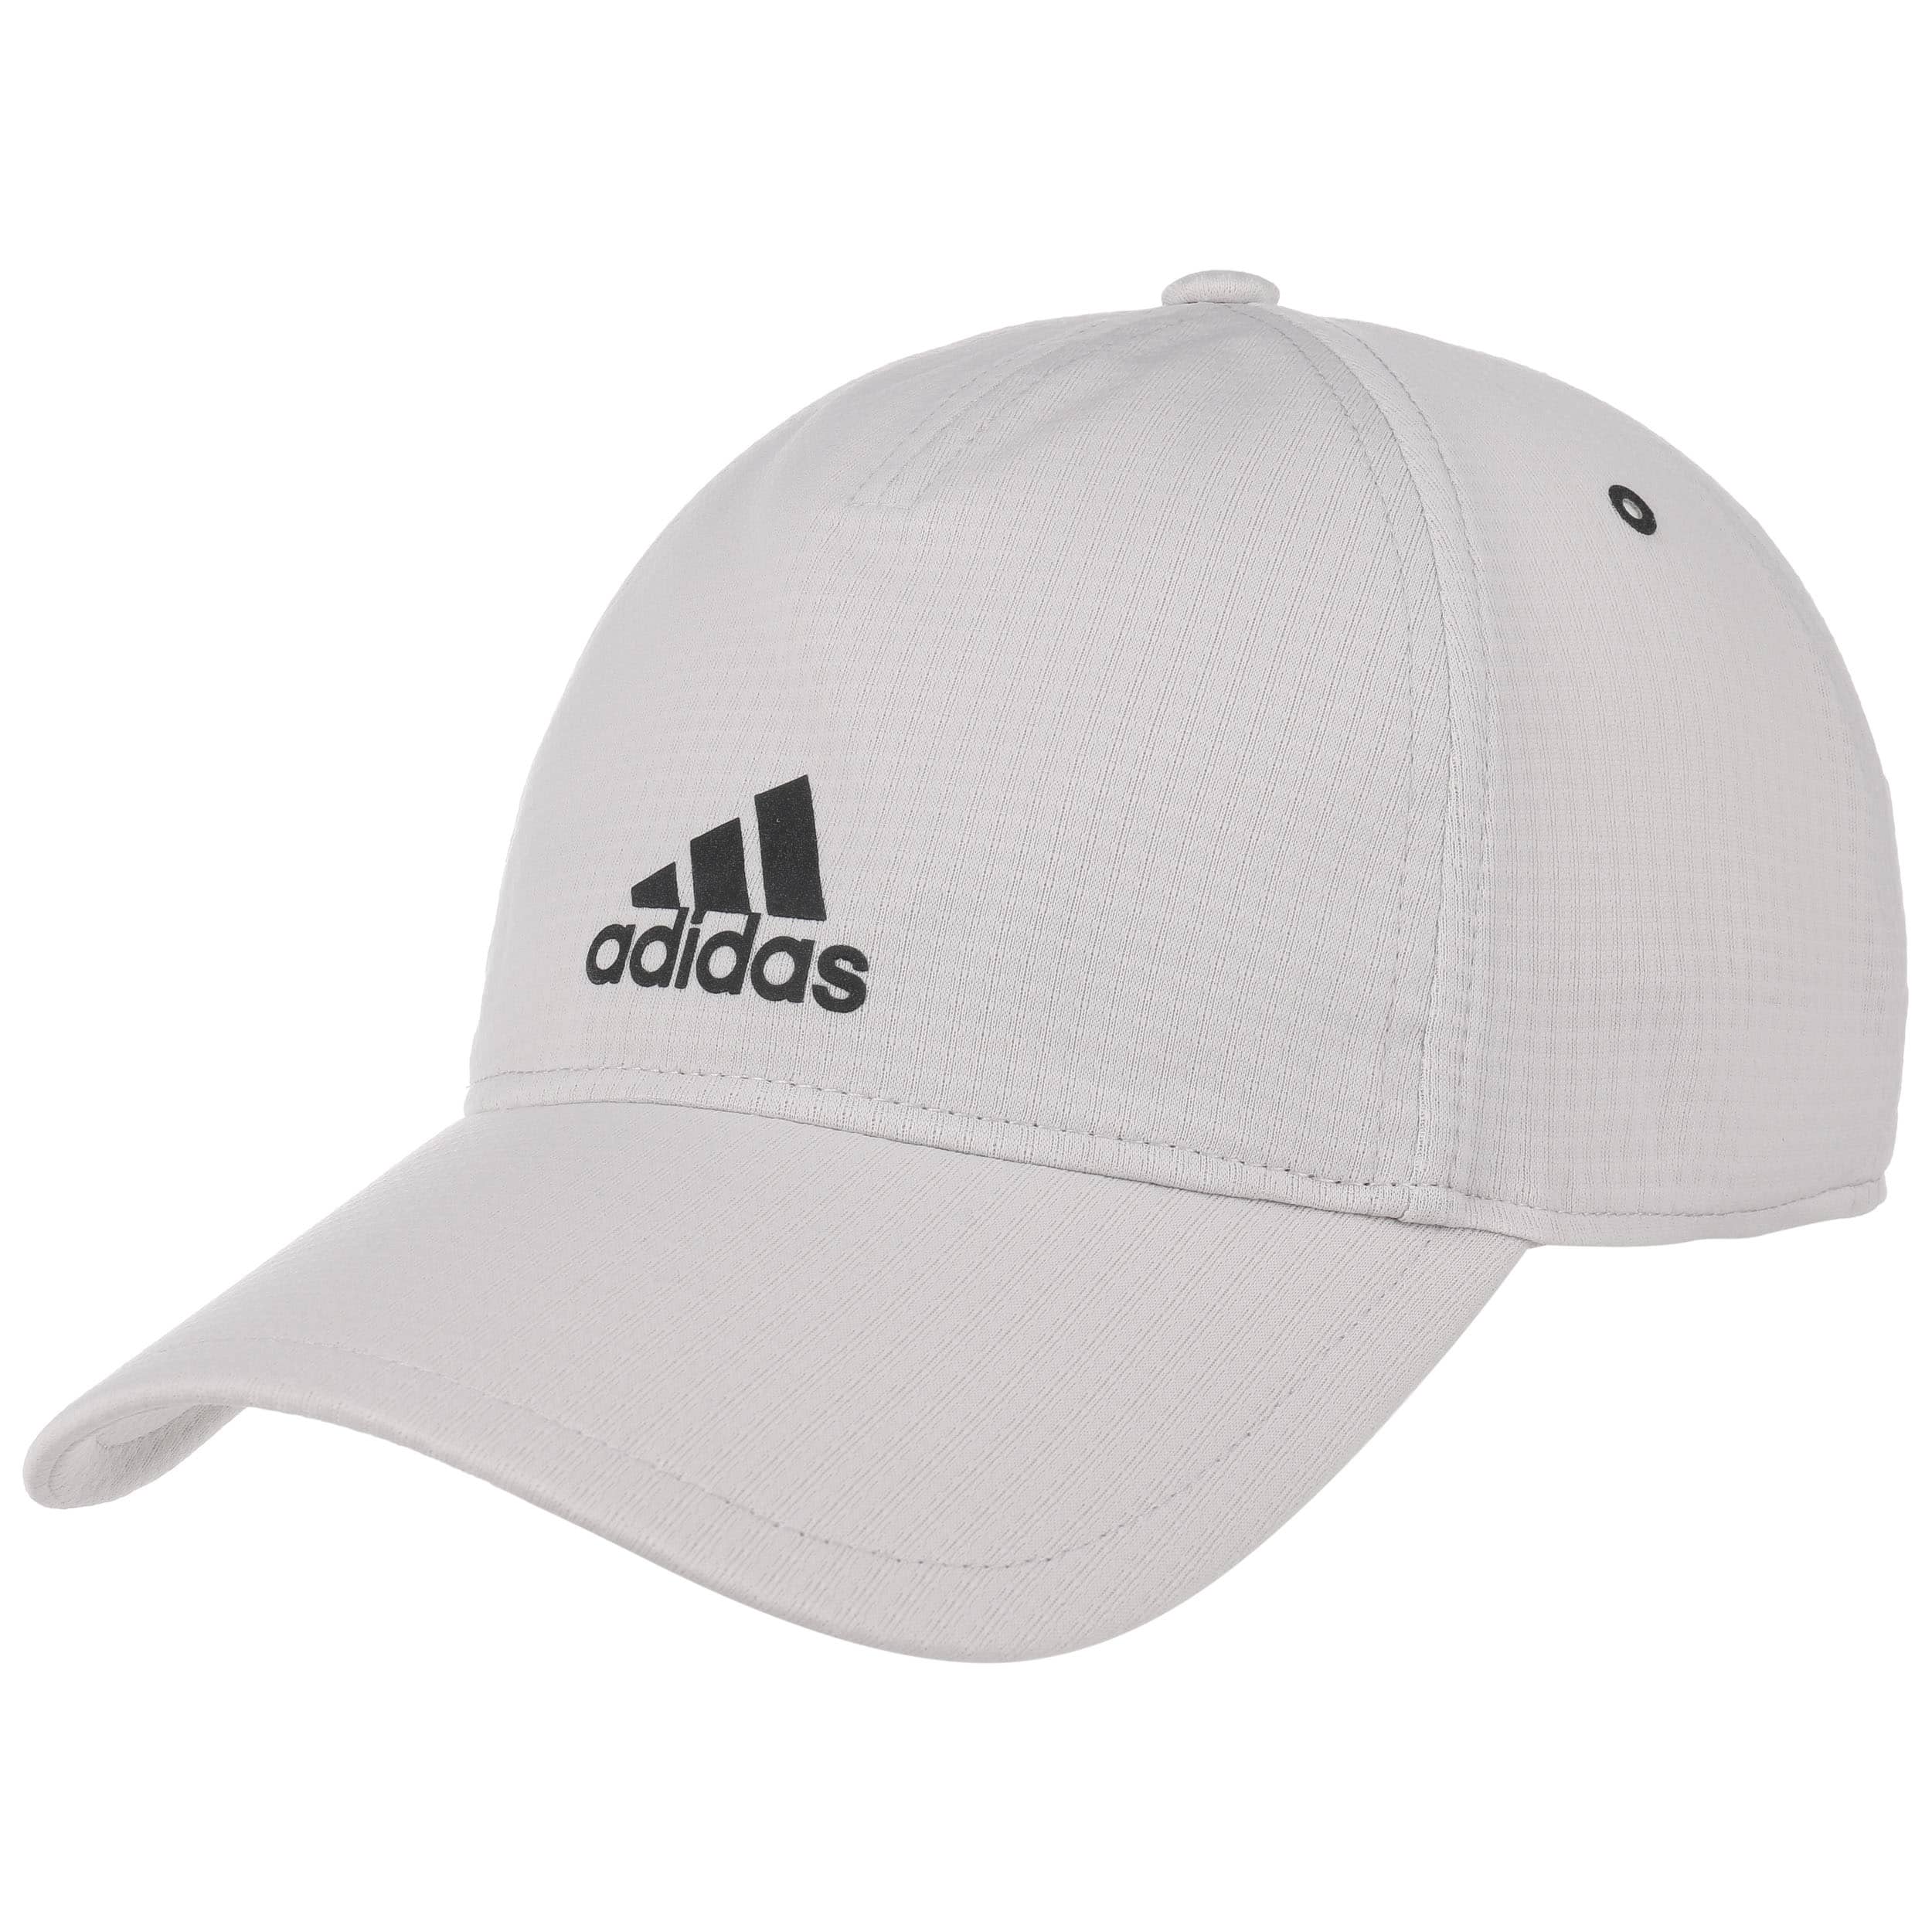 adidas head cap